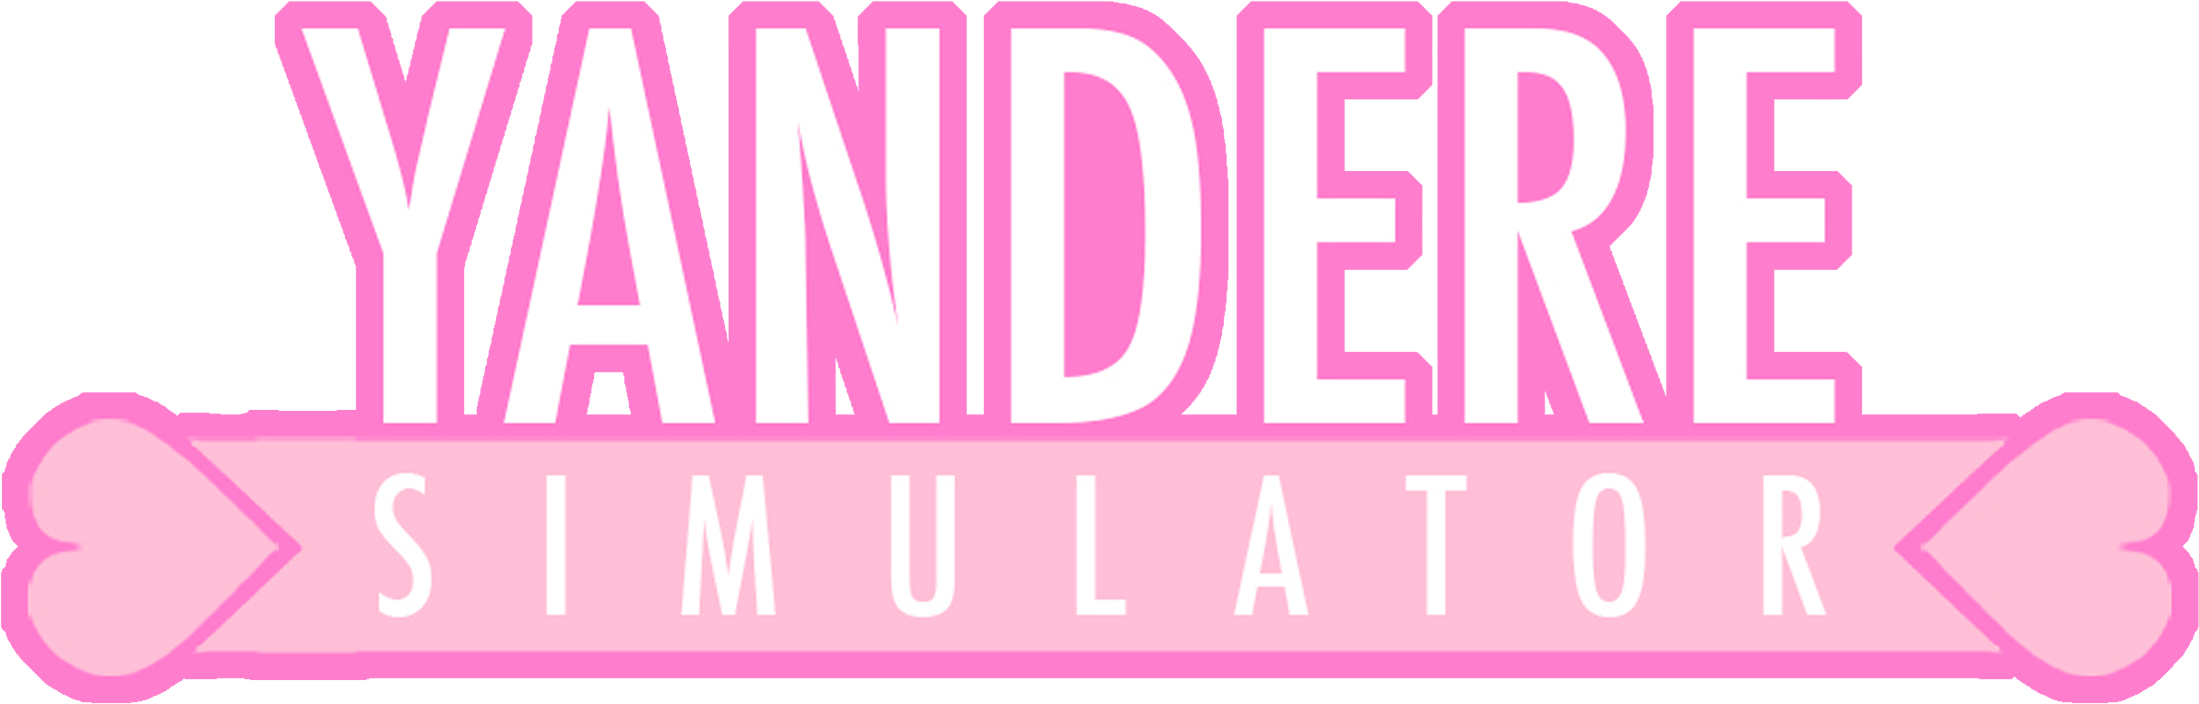 yandere simulator fan club image Yandere Simulator logo HD